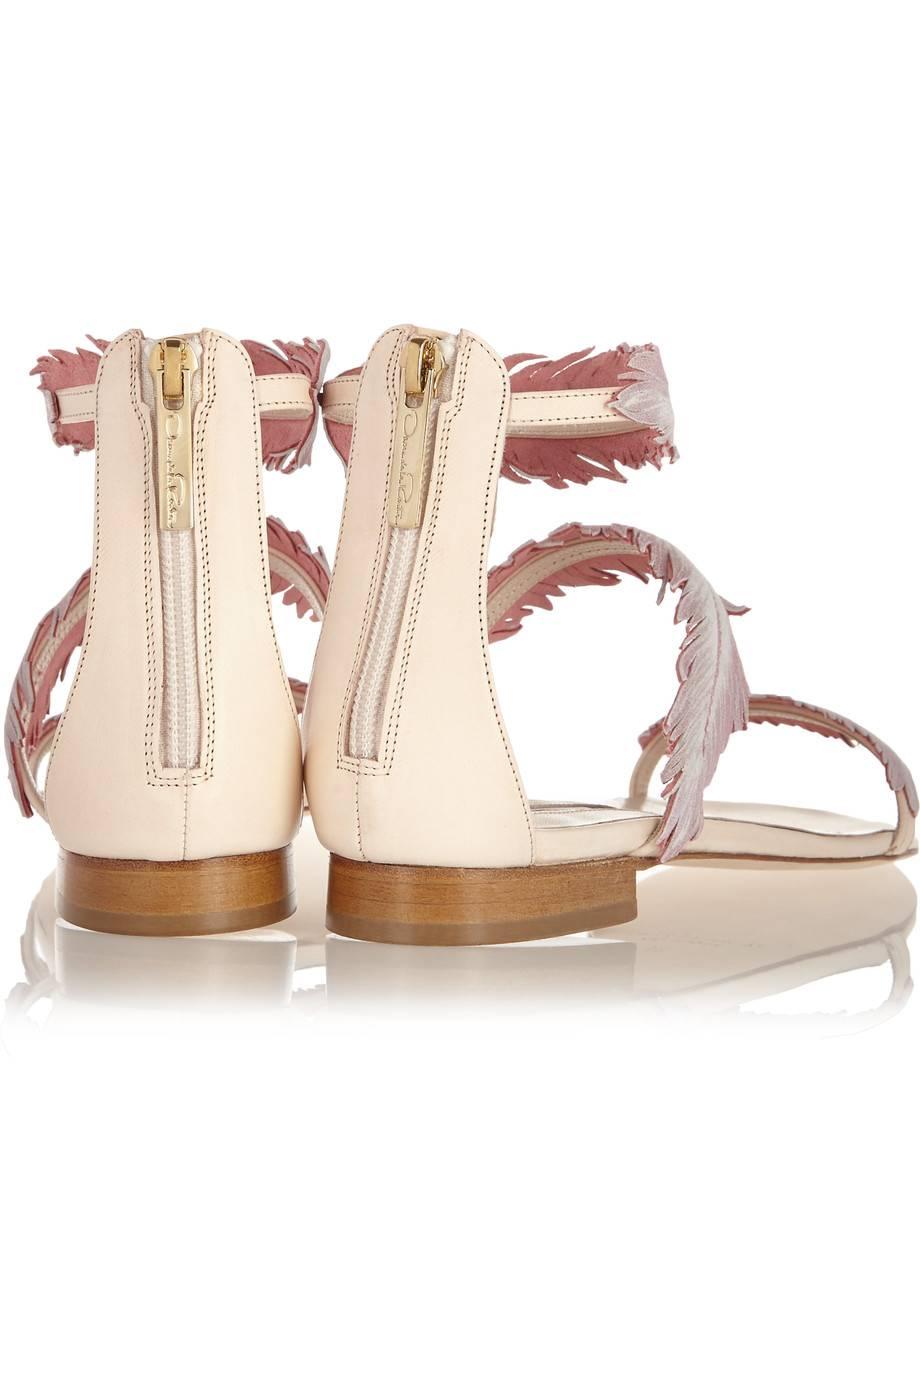 Beige Oscar de la Renta NEW & SOLD OUT Cream Pink Leather Sandals Flats Shoes in Box